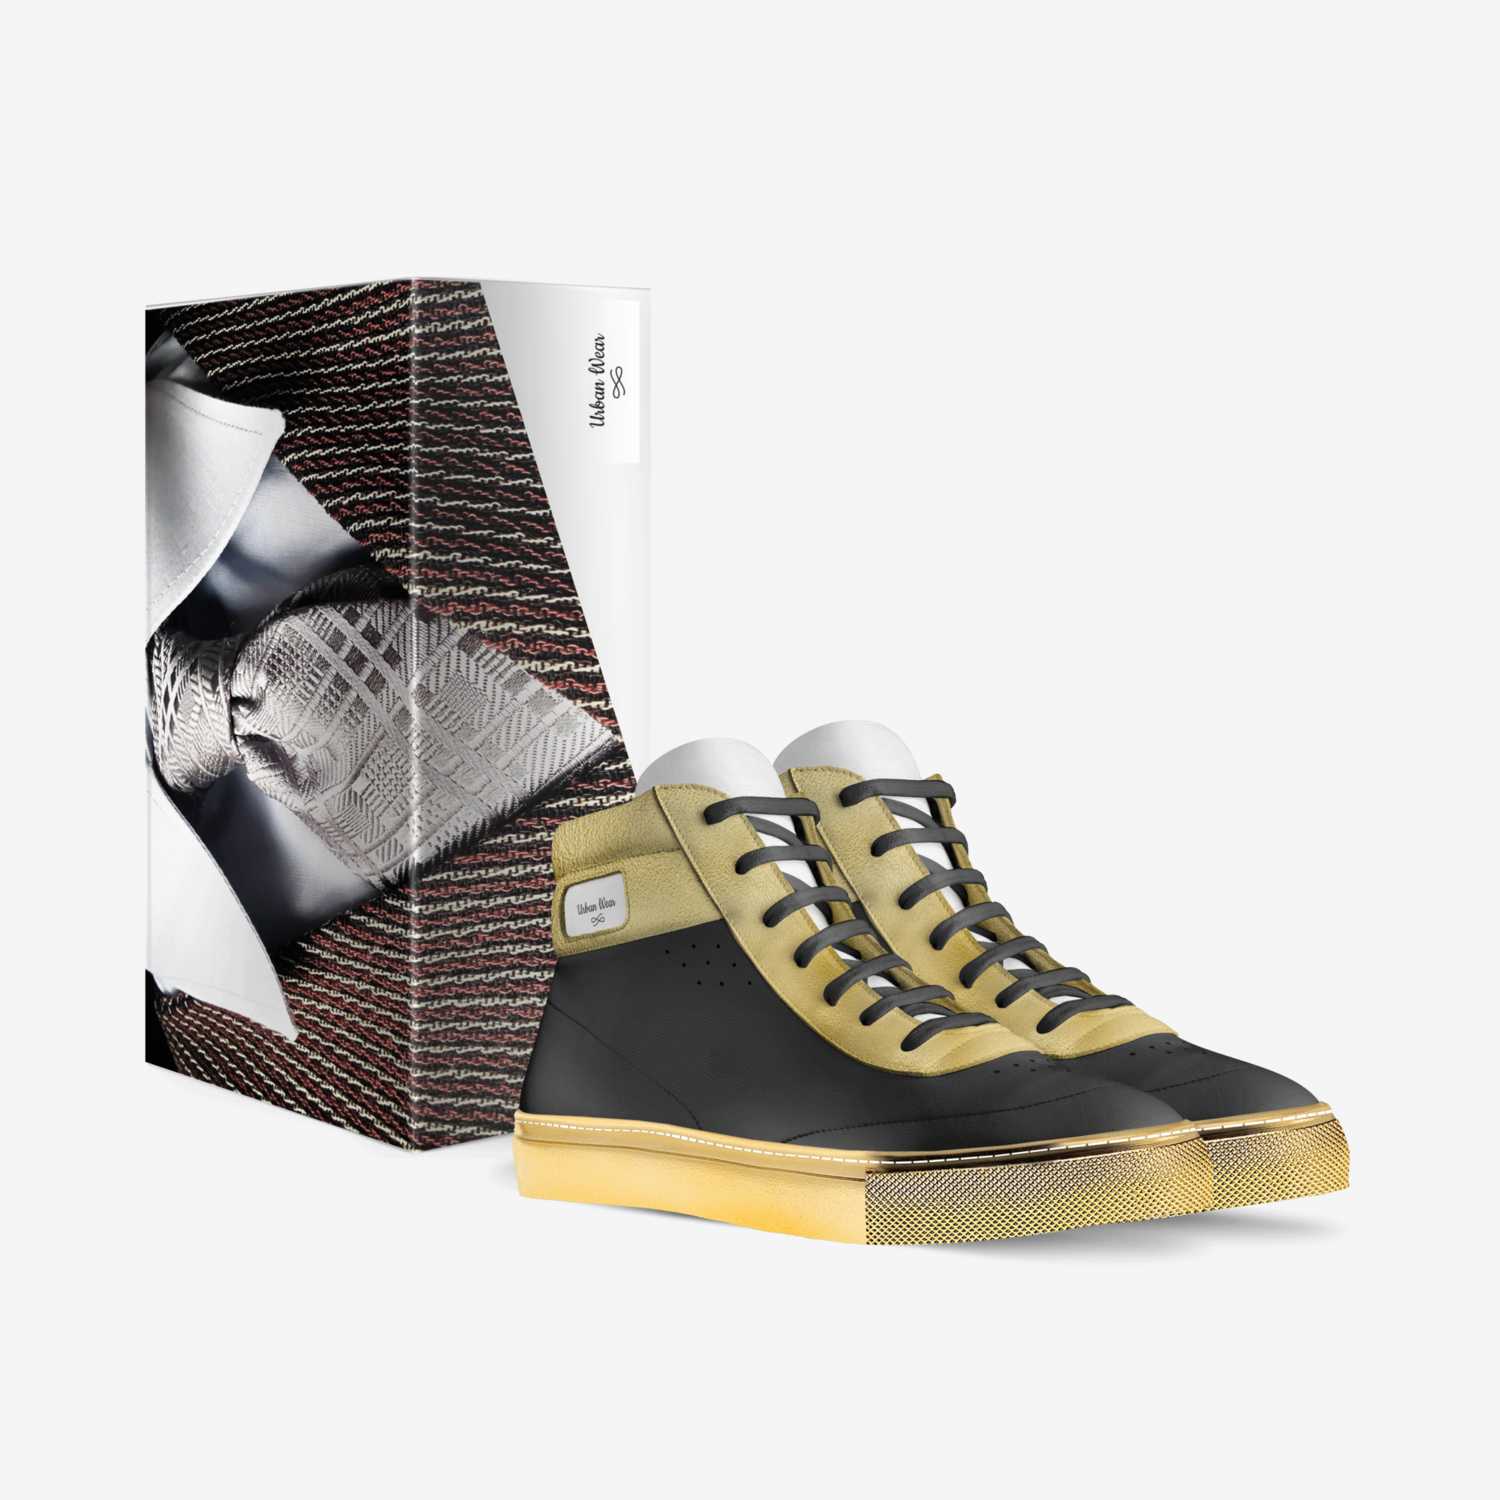 Urban Wear custom made in Italy shoes by Zayo Mark | Box view